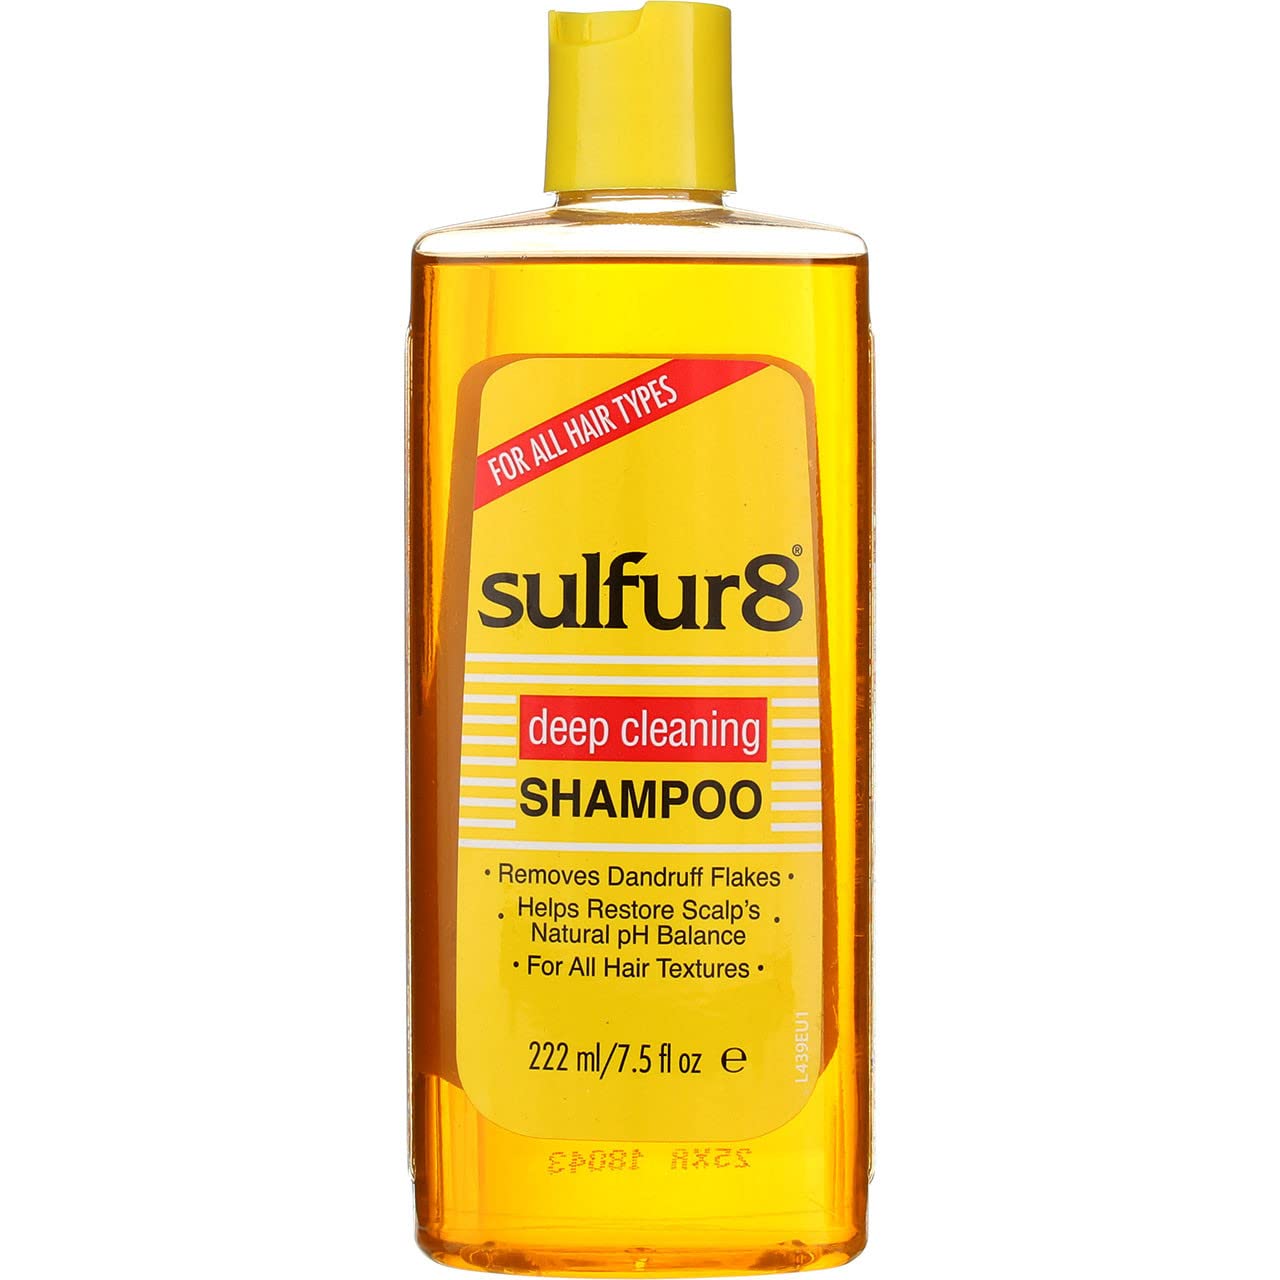 Sulfur8 Medicated Shampoo 7.5 oz